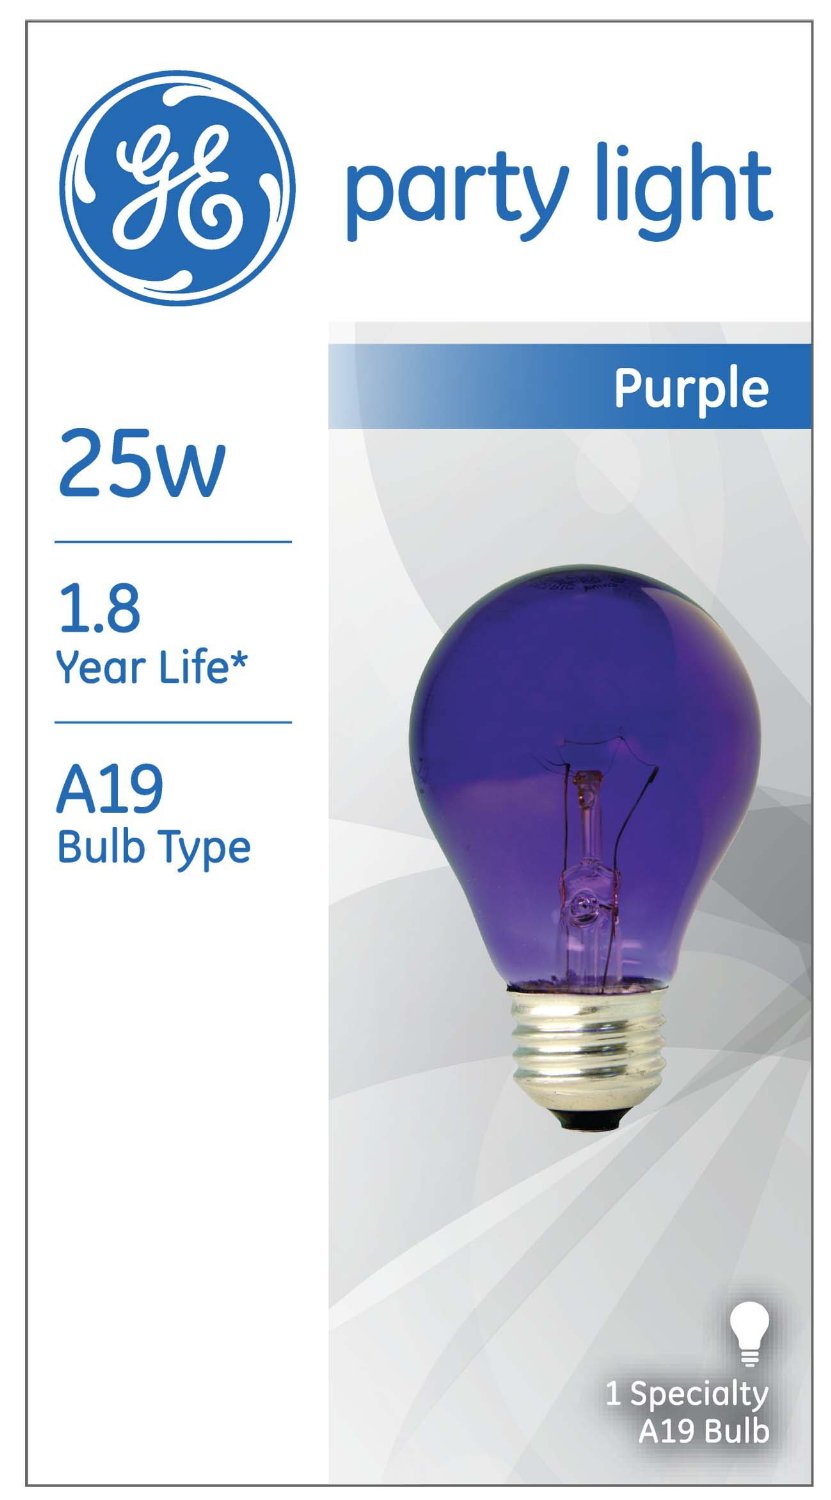 GE Lighting 22731 Incandescent A19 Party Light Bulb, Transparent Purple, 25W, 120V